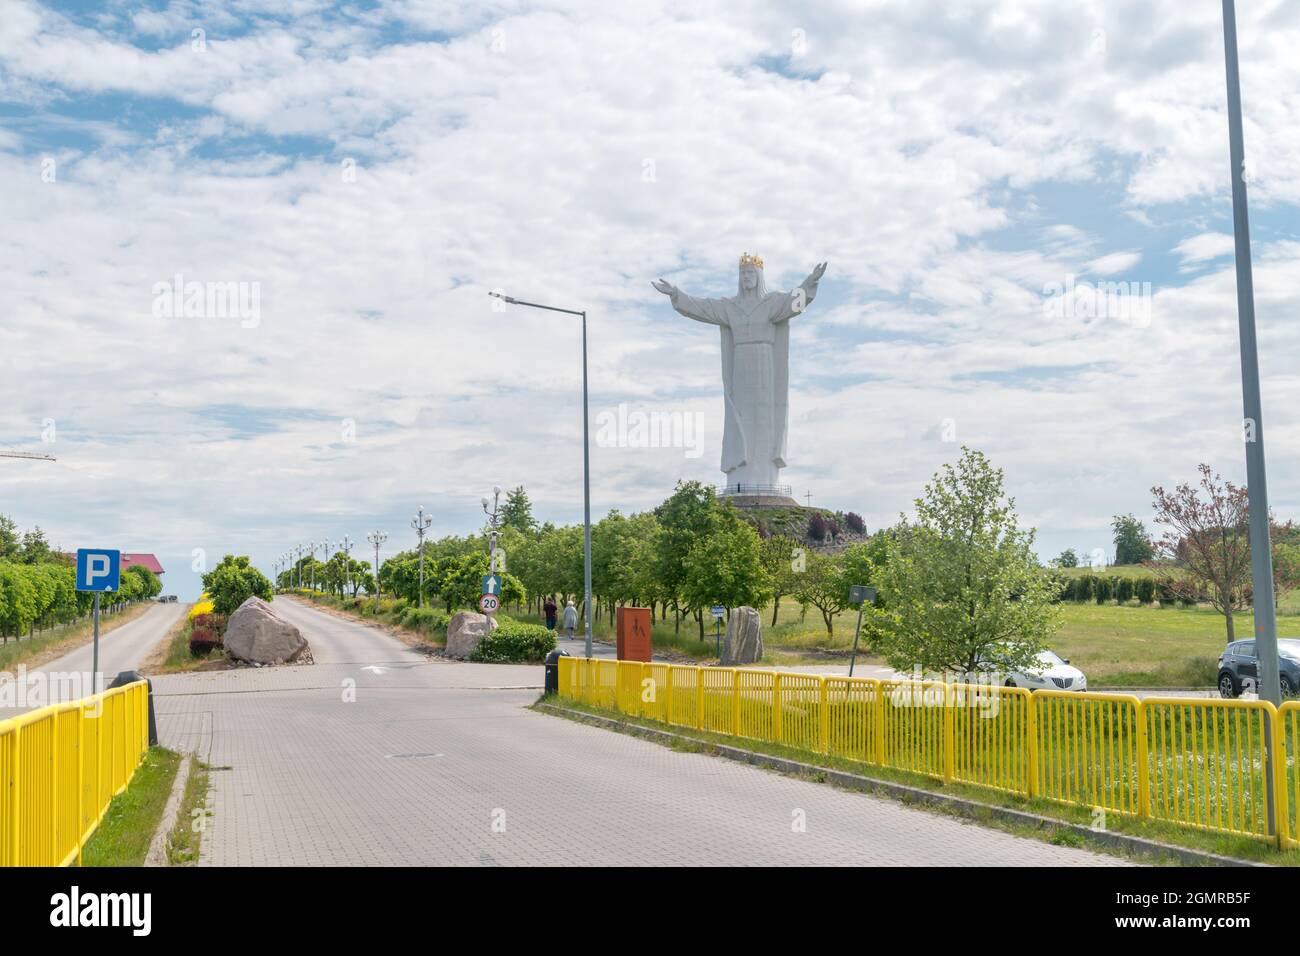 Swiebodzin, Poland - June 1, 2021: Street view on statue of King Jesus Christ. Stock Photo